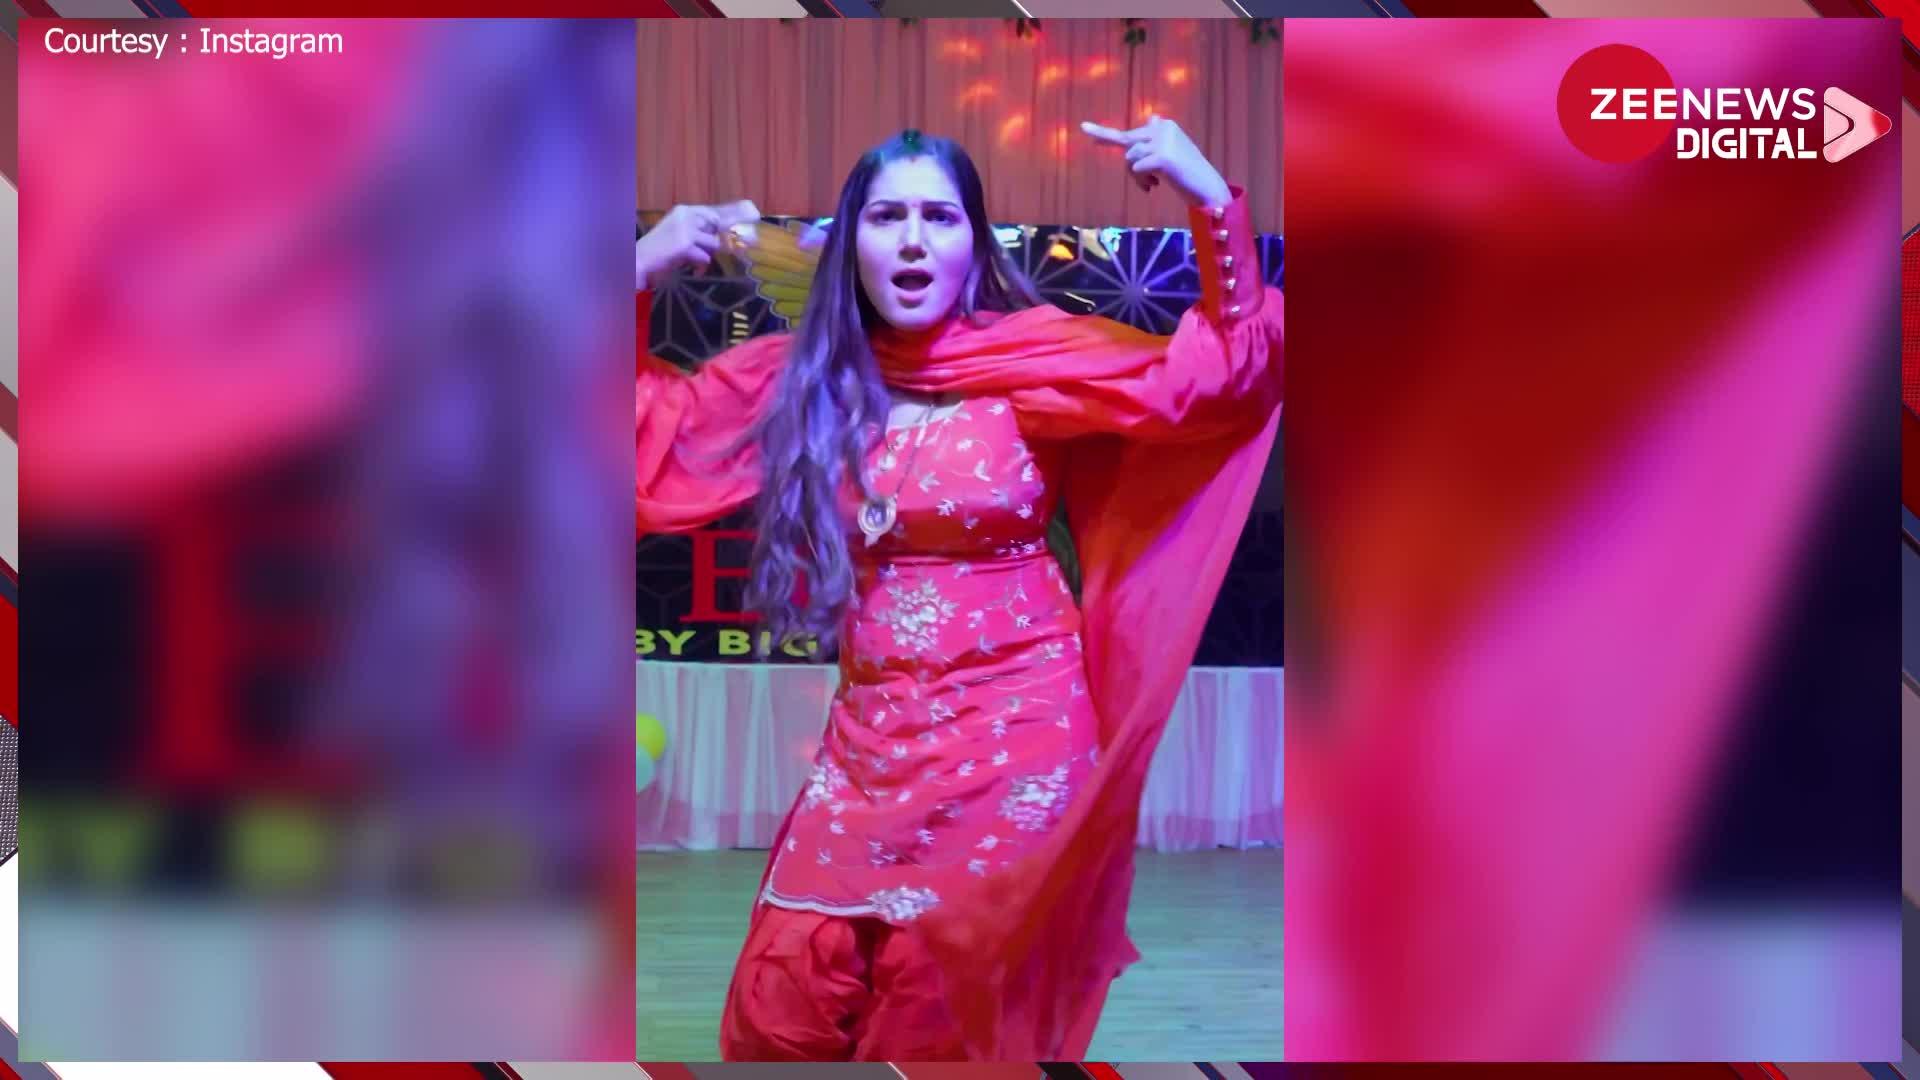 Xxx Sapna Choudhary Haryanvi - Sapna Choudhary desi queen share hot and sexy dance in backless suit people  eyes stuck on her tattoo | à¤¬à¥ˆà¤•à¤²à¥‡à¤¸ à¤¸à¥‚à¤Ÿ à¤ªà¤¹à¤¨ Sapna Choudhary à¤¨à¥‡ à¤¹à¤¿à¤²à¤¾à¤ˆ à¤•à¤®à¤°à¤¿à¤¯à¤¾,  à¤ªà¥€à¤  à¤ªà¤° à¤¬à¤¨à¥‡ à¤Ÿà¥ˆà¤Ÿà¥‚ à¤ªà¤°